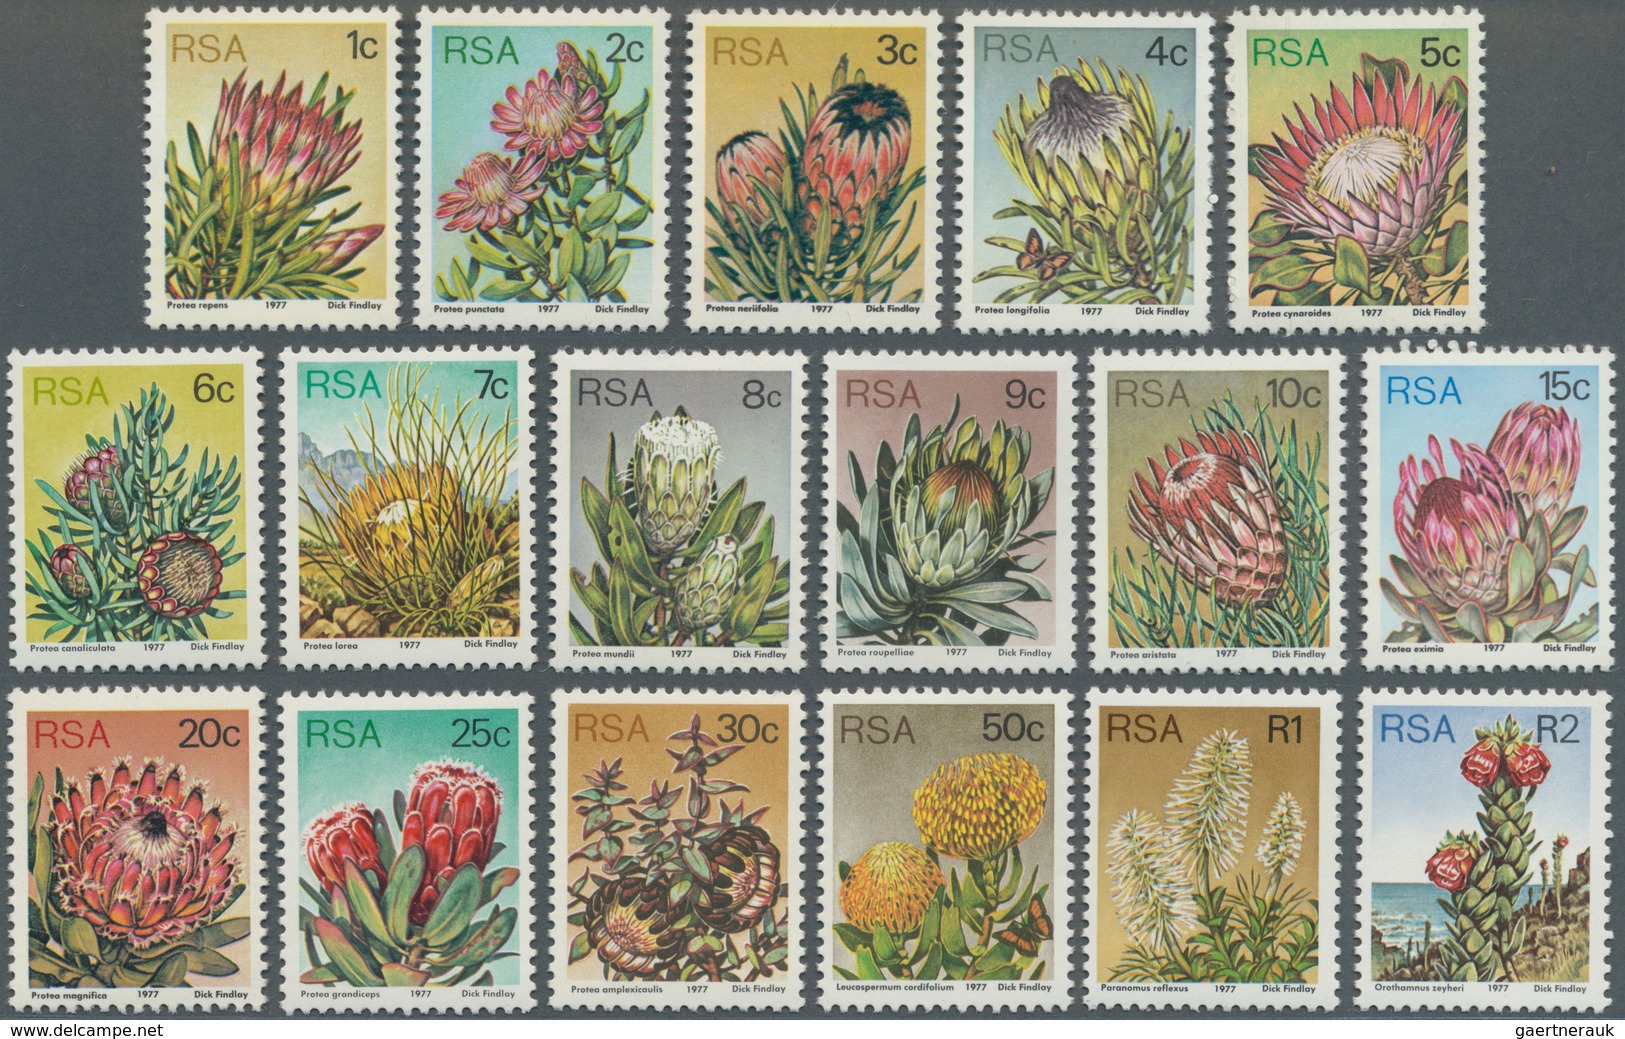 Südafrika: 1977, Definitive Issue ‚flowers‘ (proteus Plants) Complete Set Of 17 In A Lot With 100 Se - Oblitérés